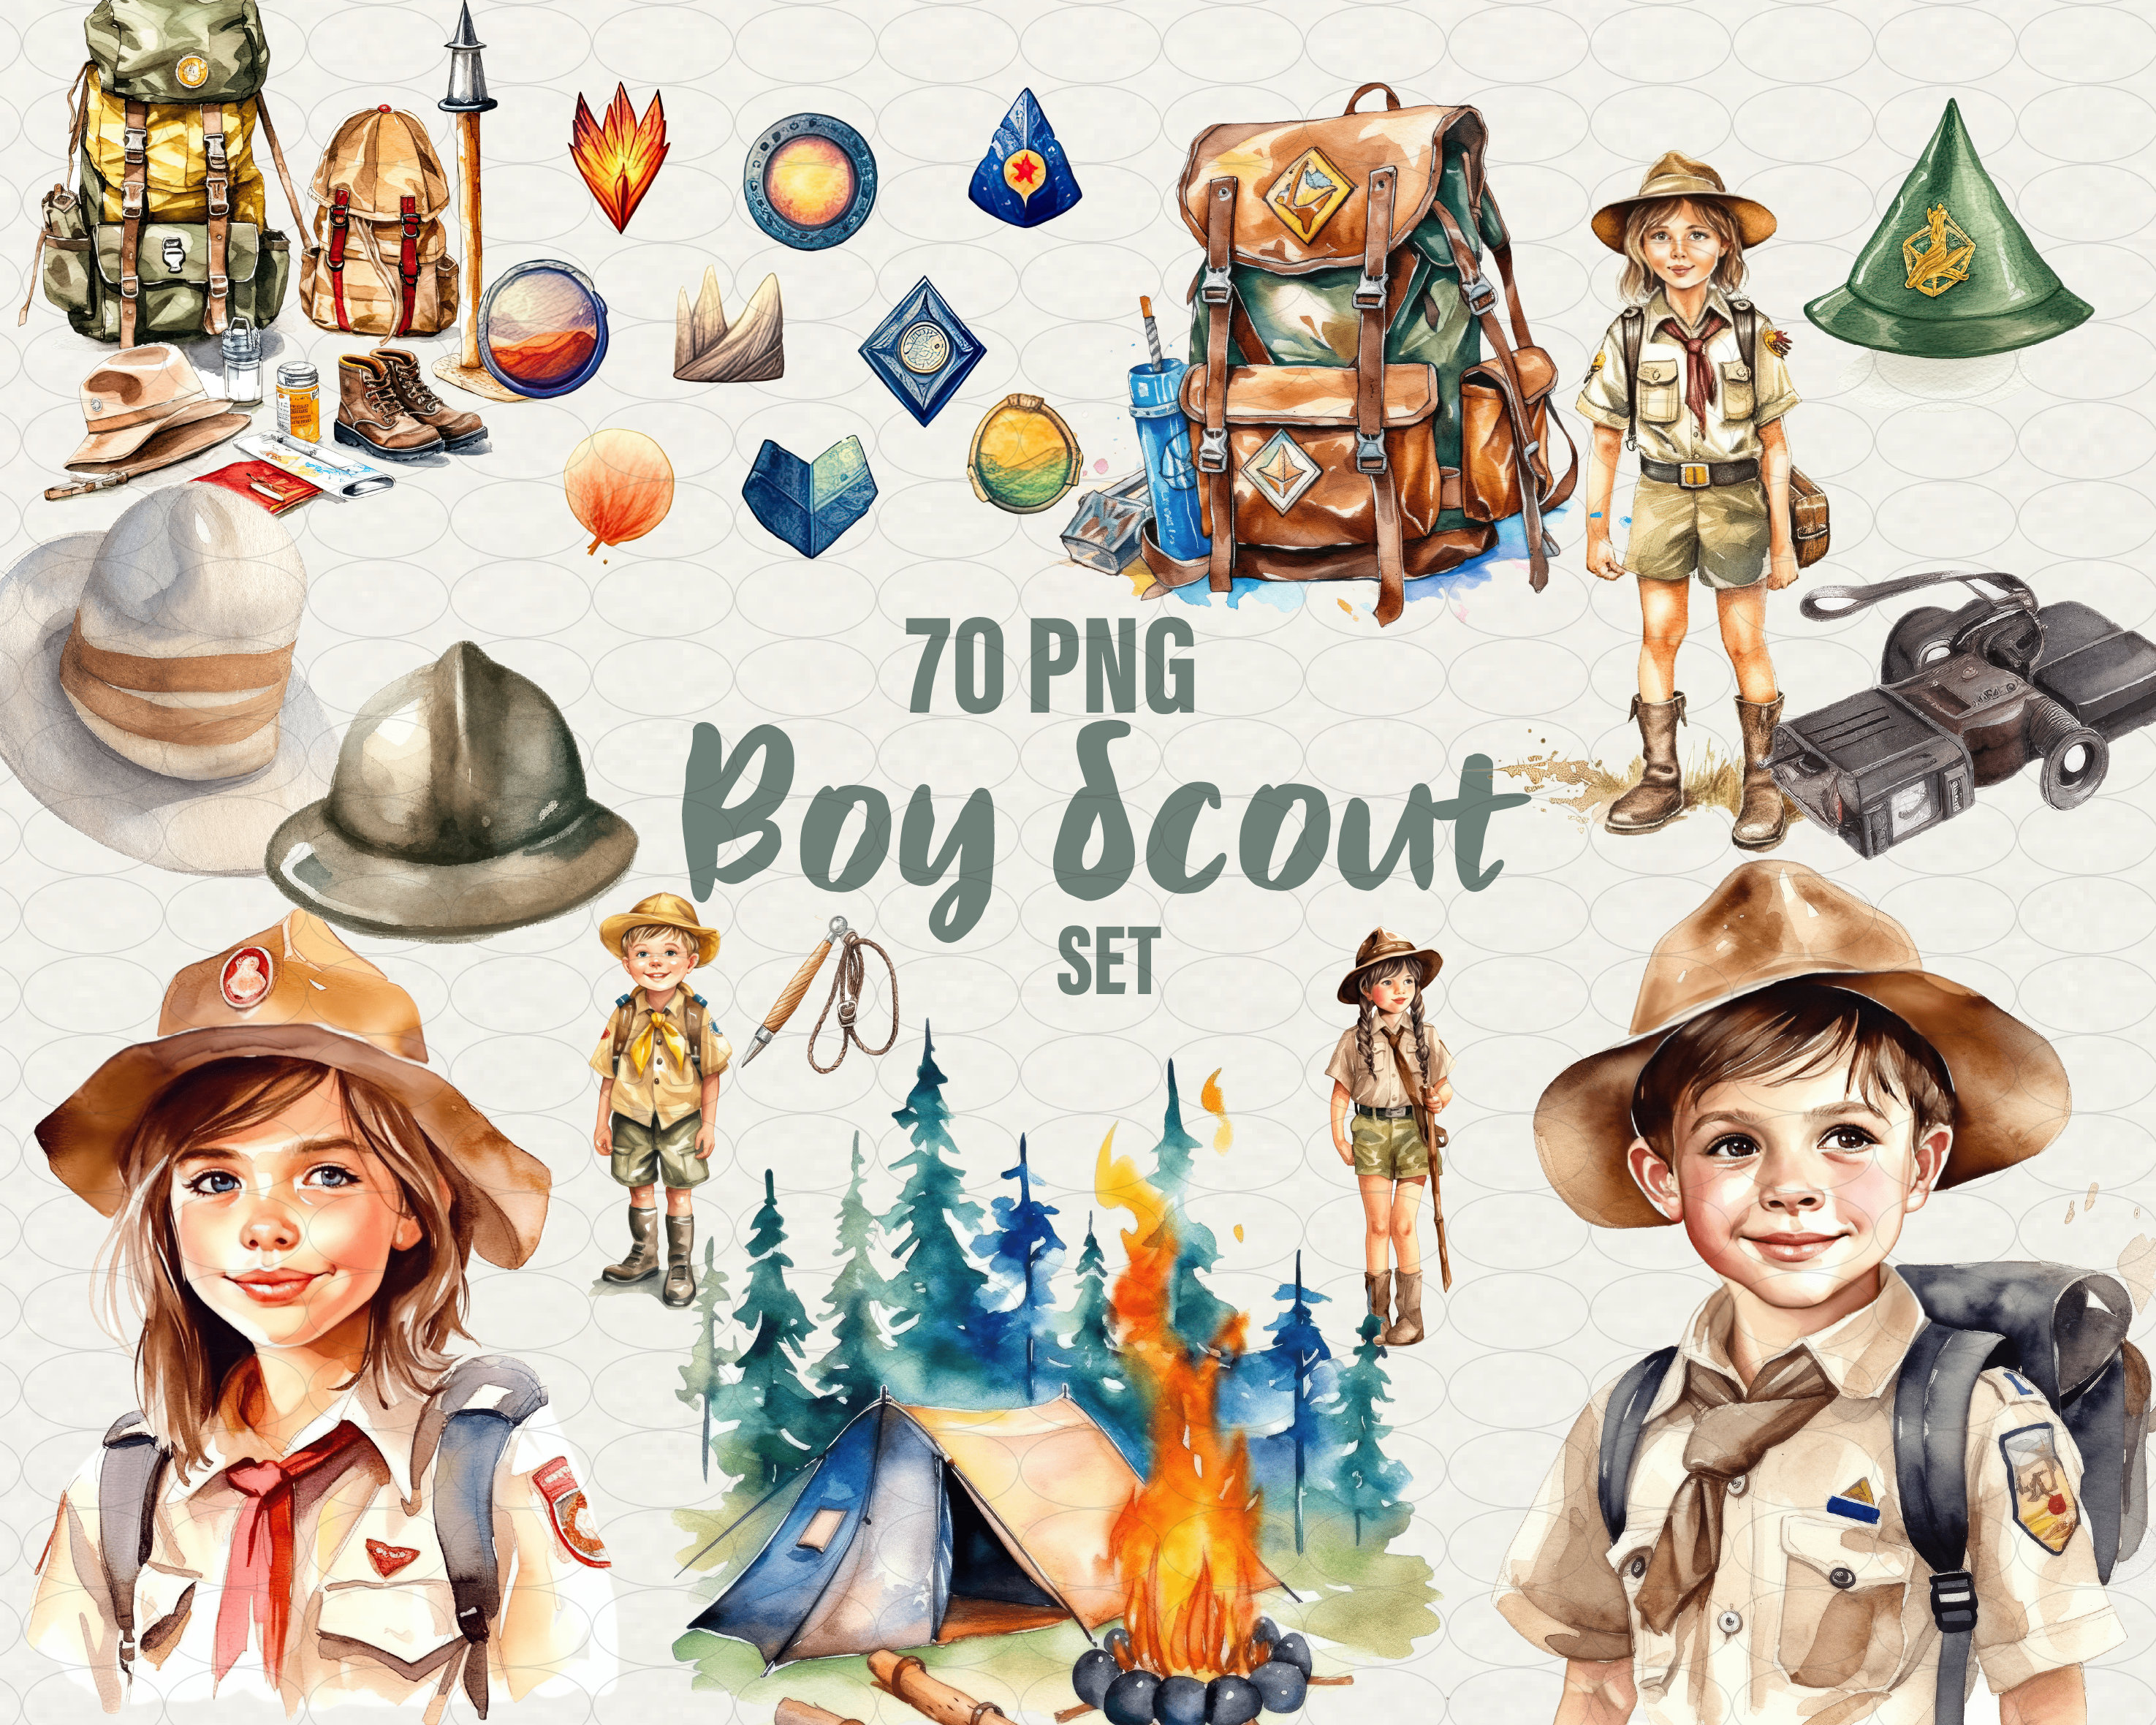 Boy Scouts Clip Art Set